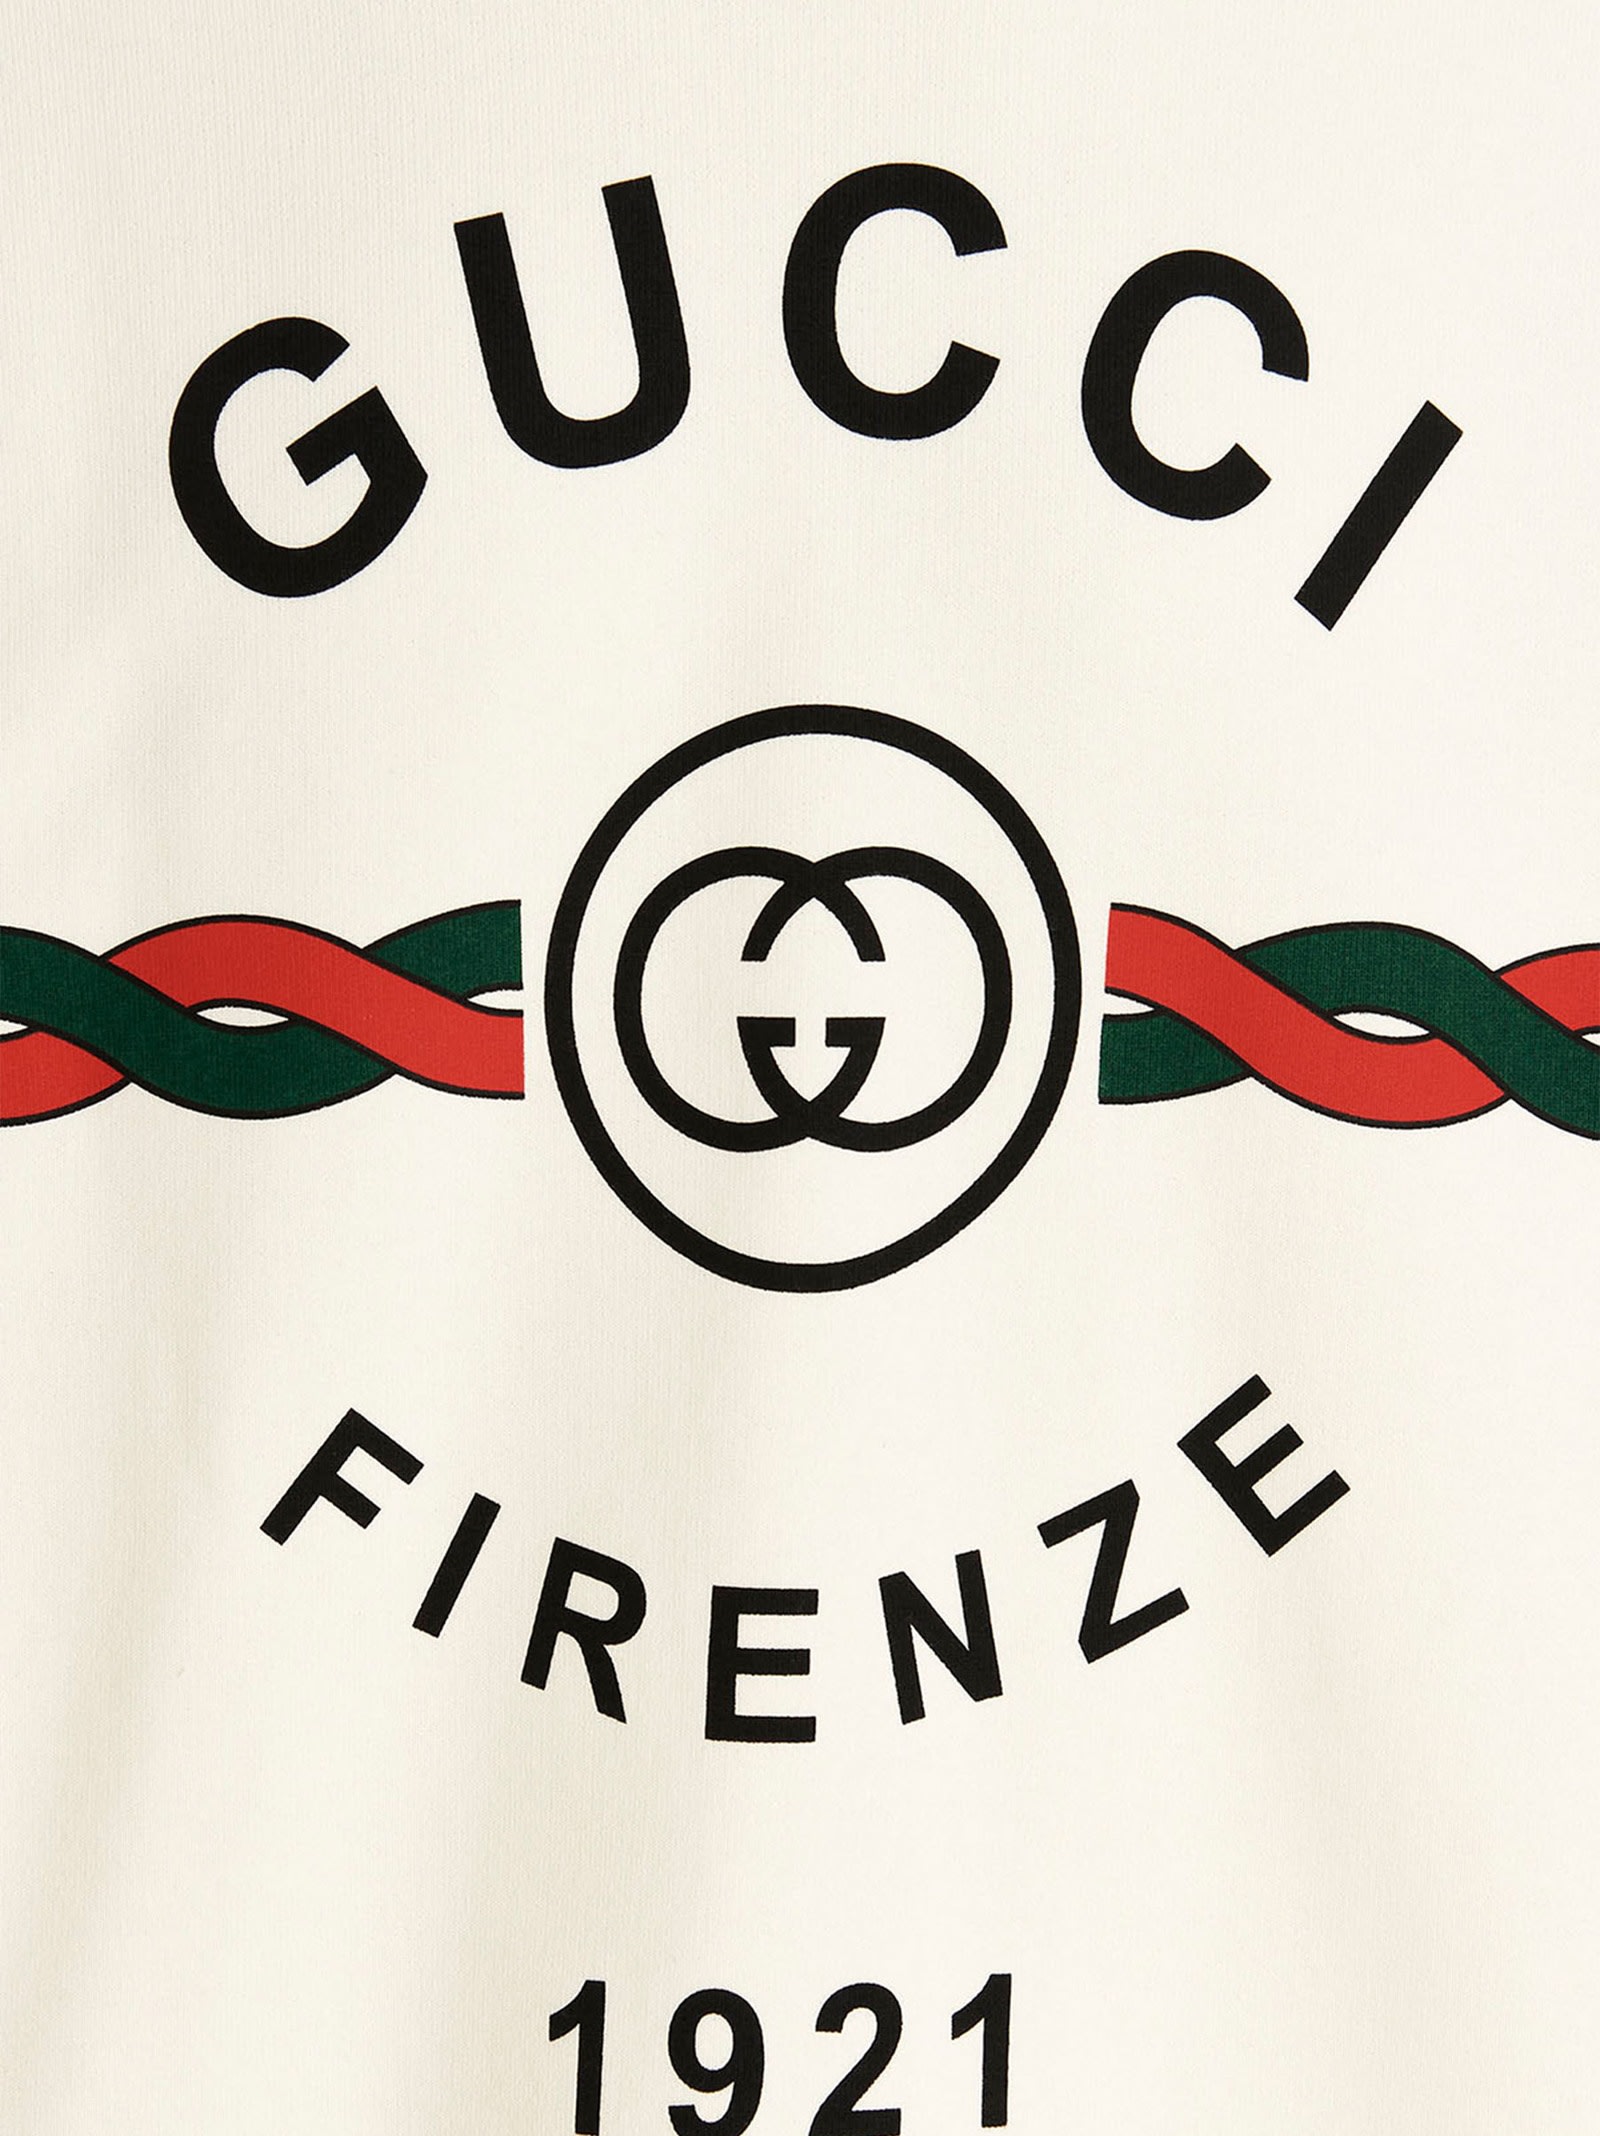 Shop Gucci Firenze 1921 Hoodie In White